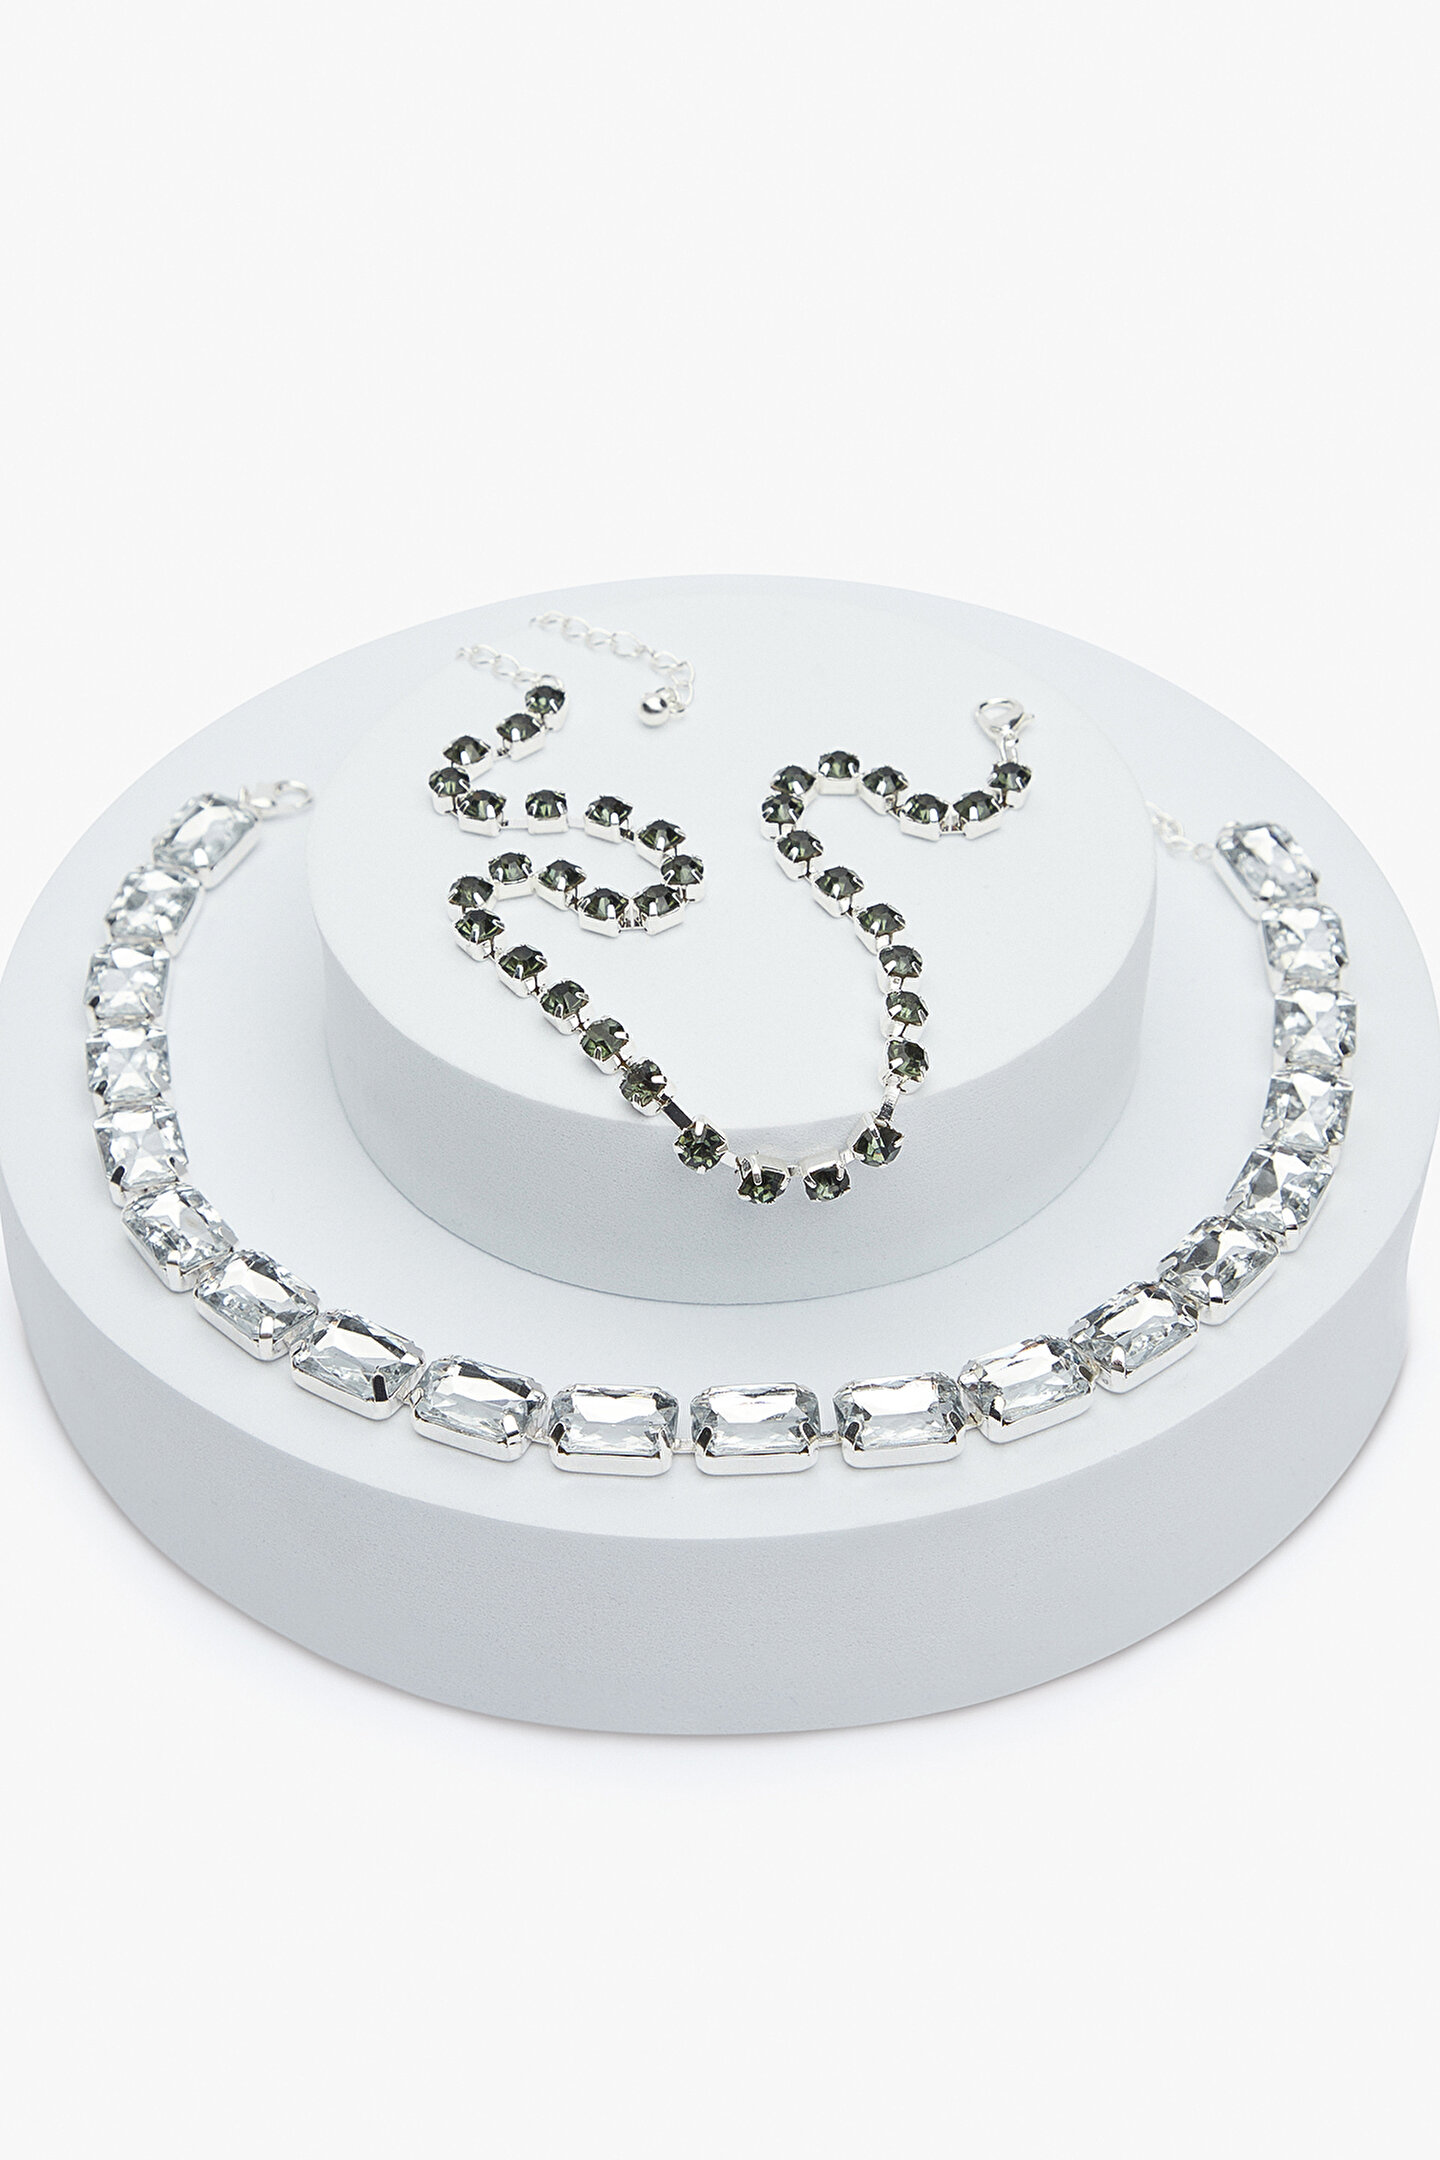 Diamond Silver Necklace - 1